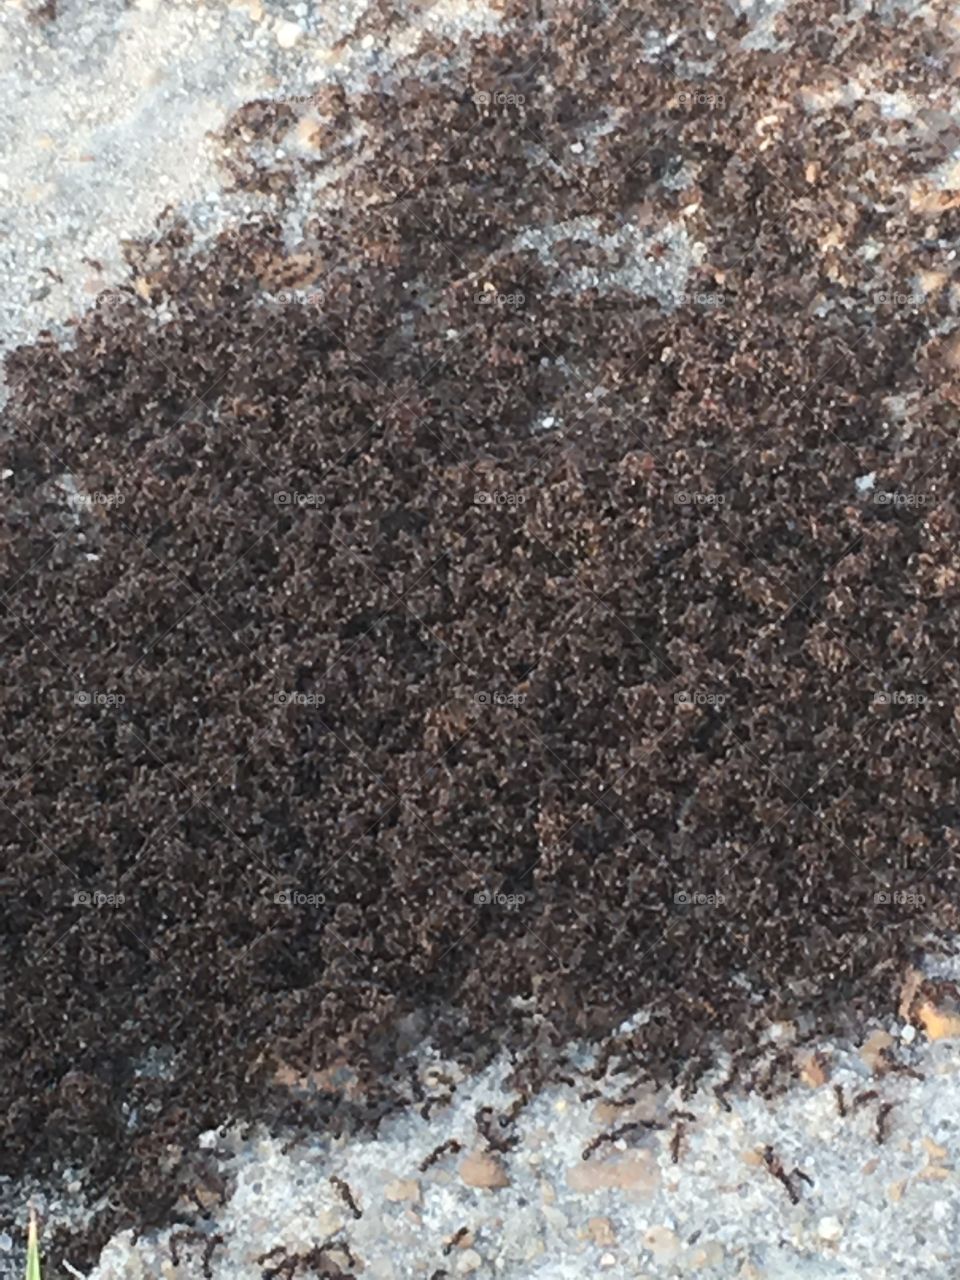 Ant colonizing 